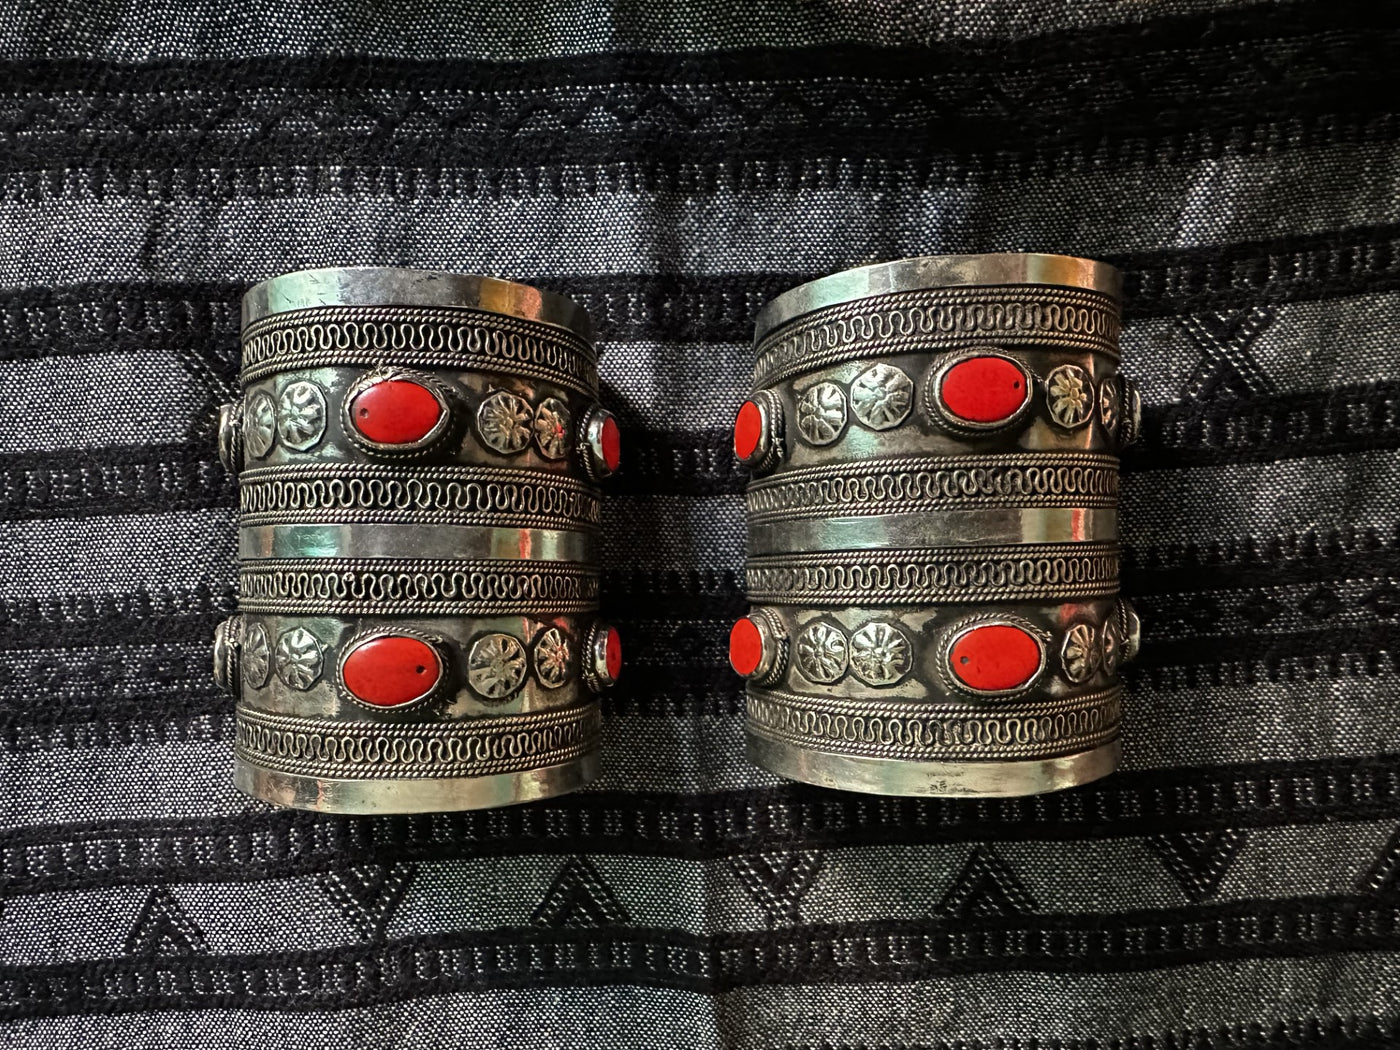 Amira cuffs pair